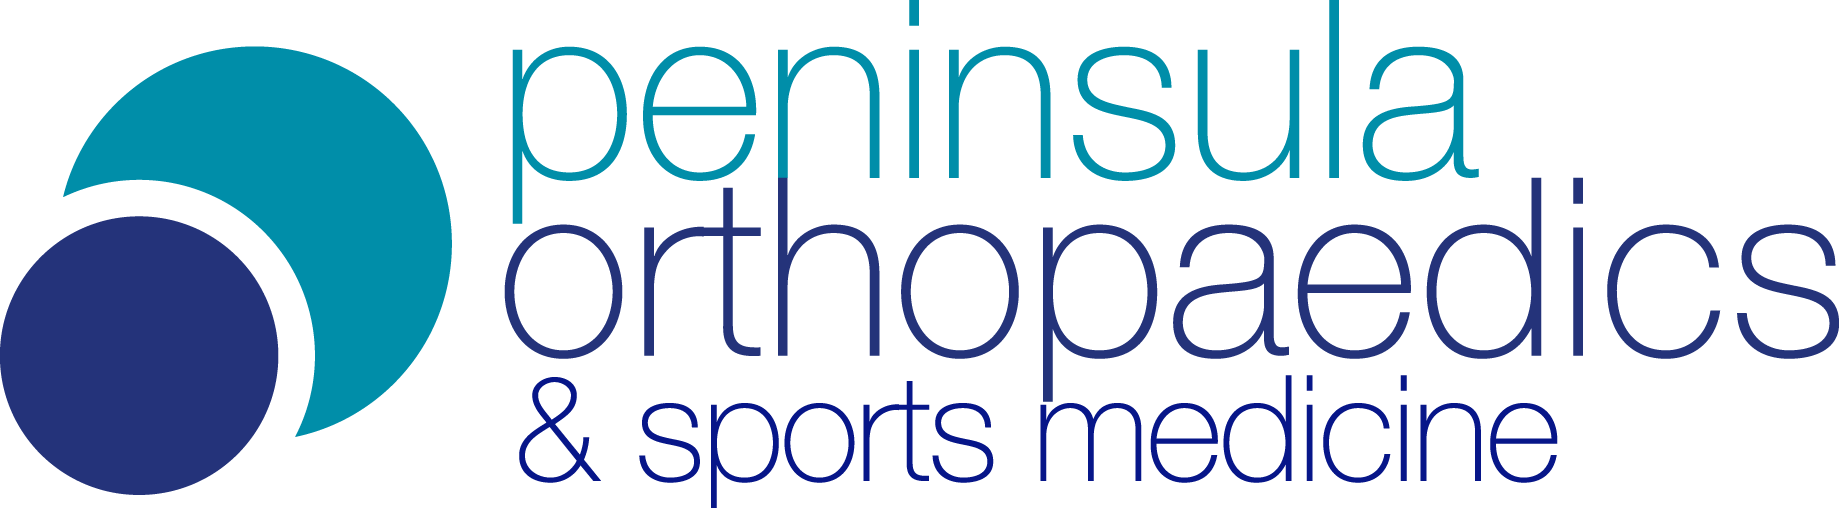 Peninsula Orthopaedics & Sports Medicine